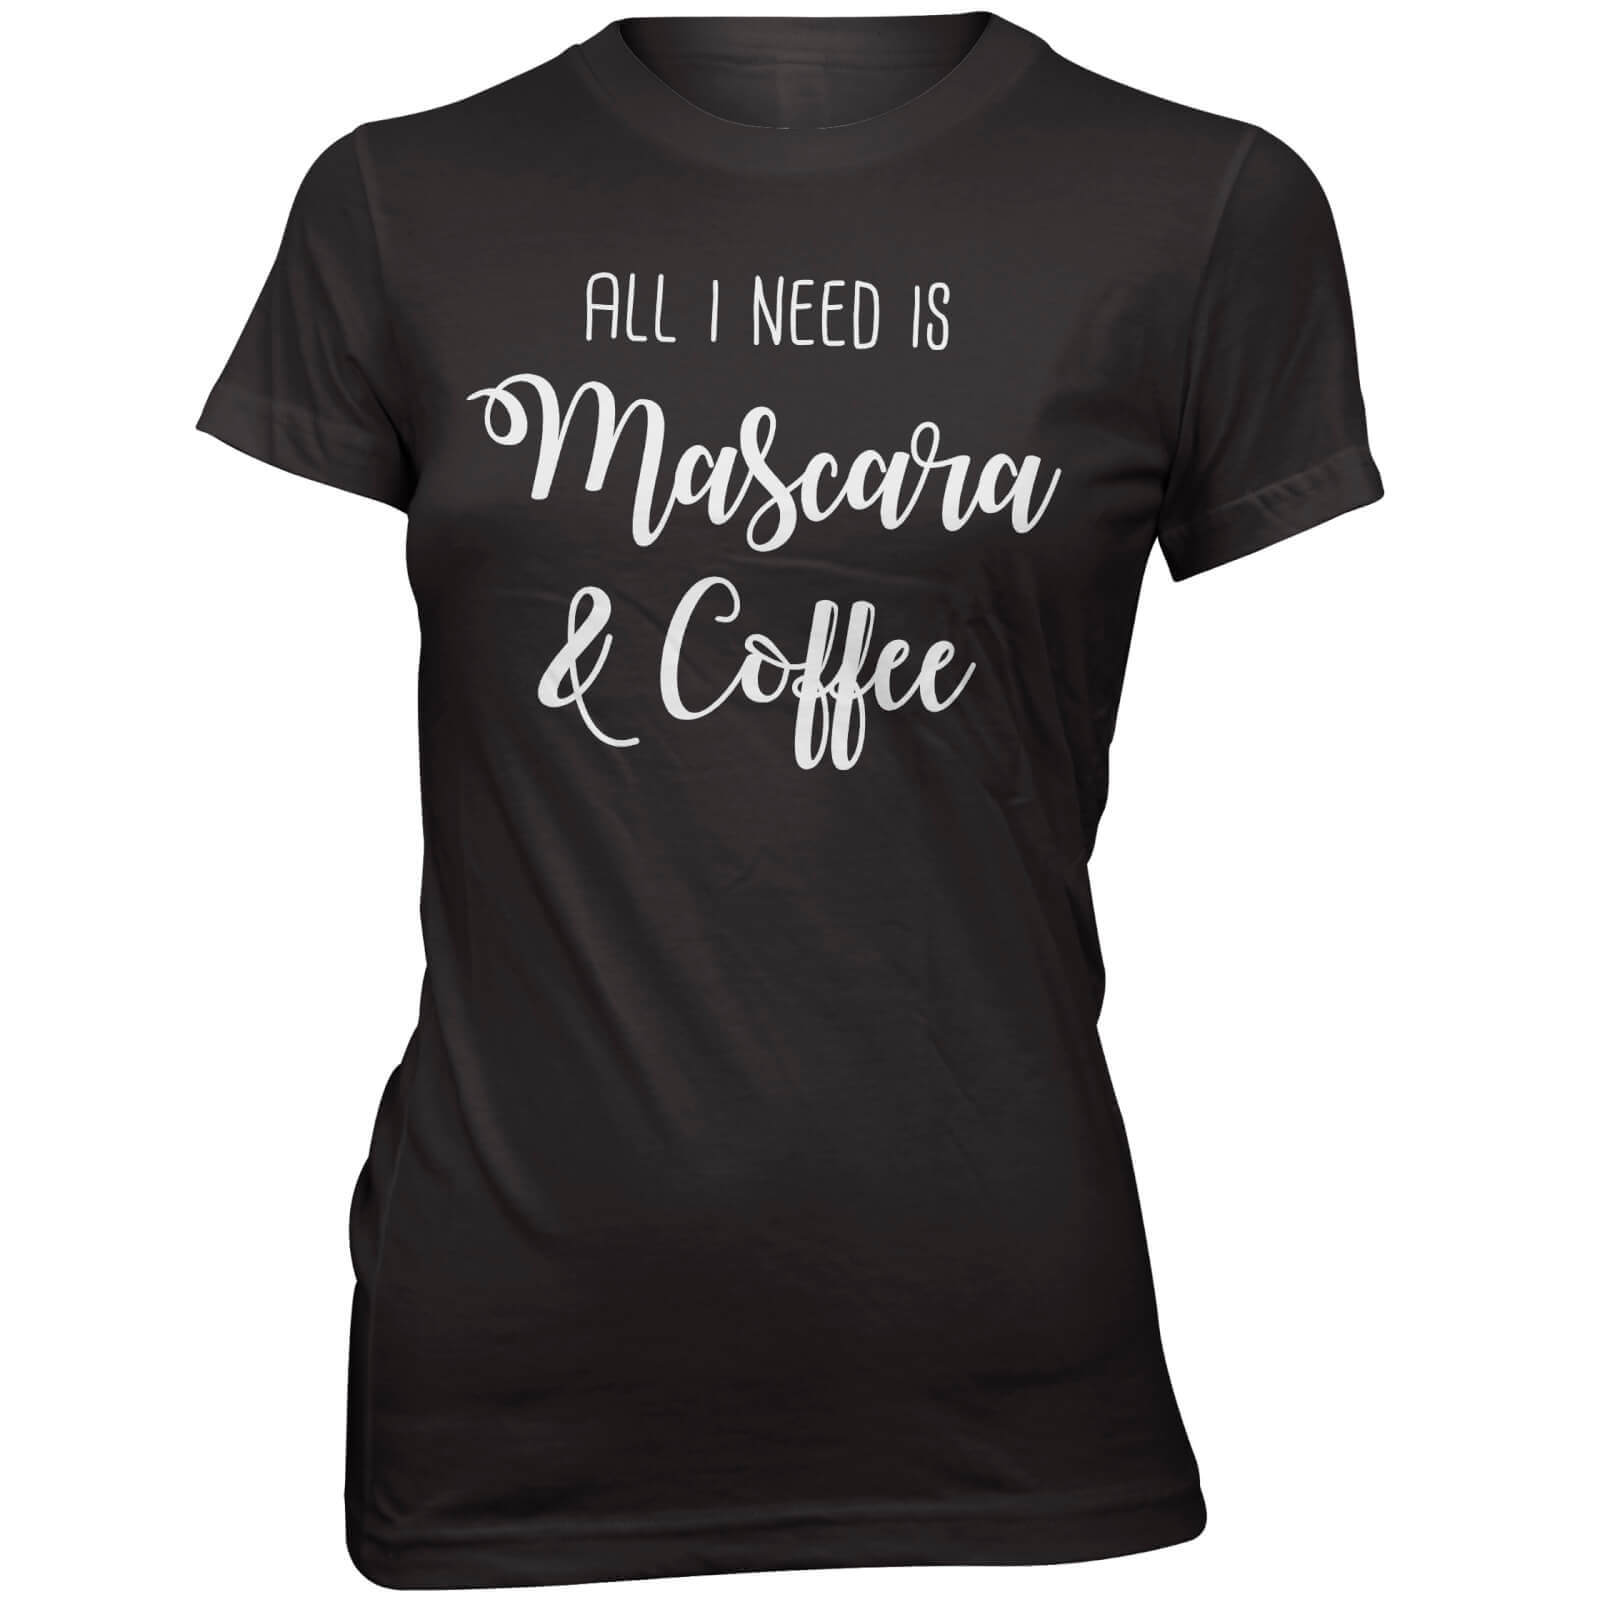 Mascara and Coffee Women's Slogan T-Shirt - S - Black